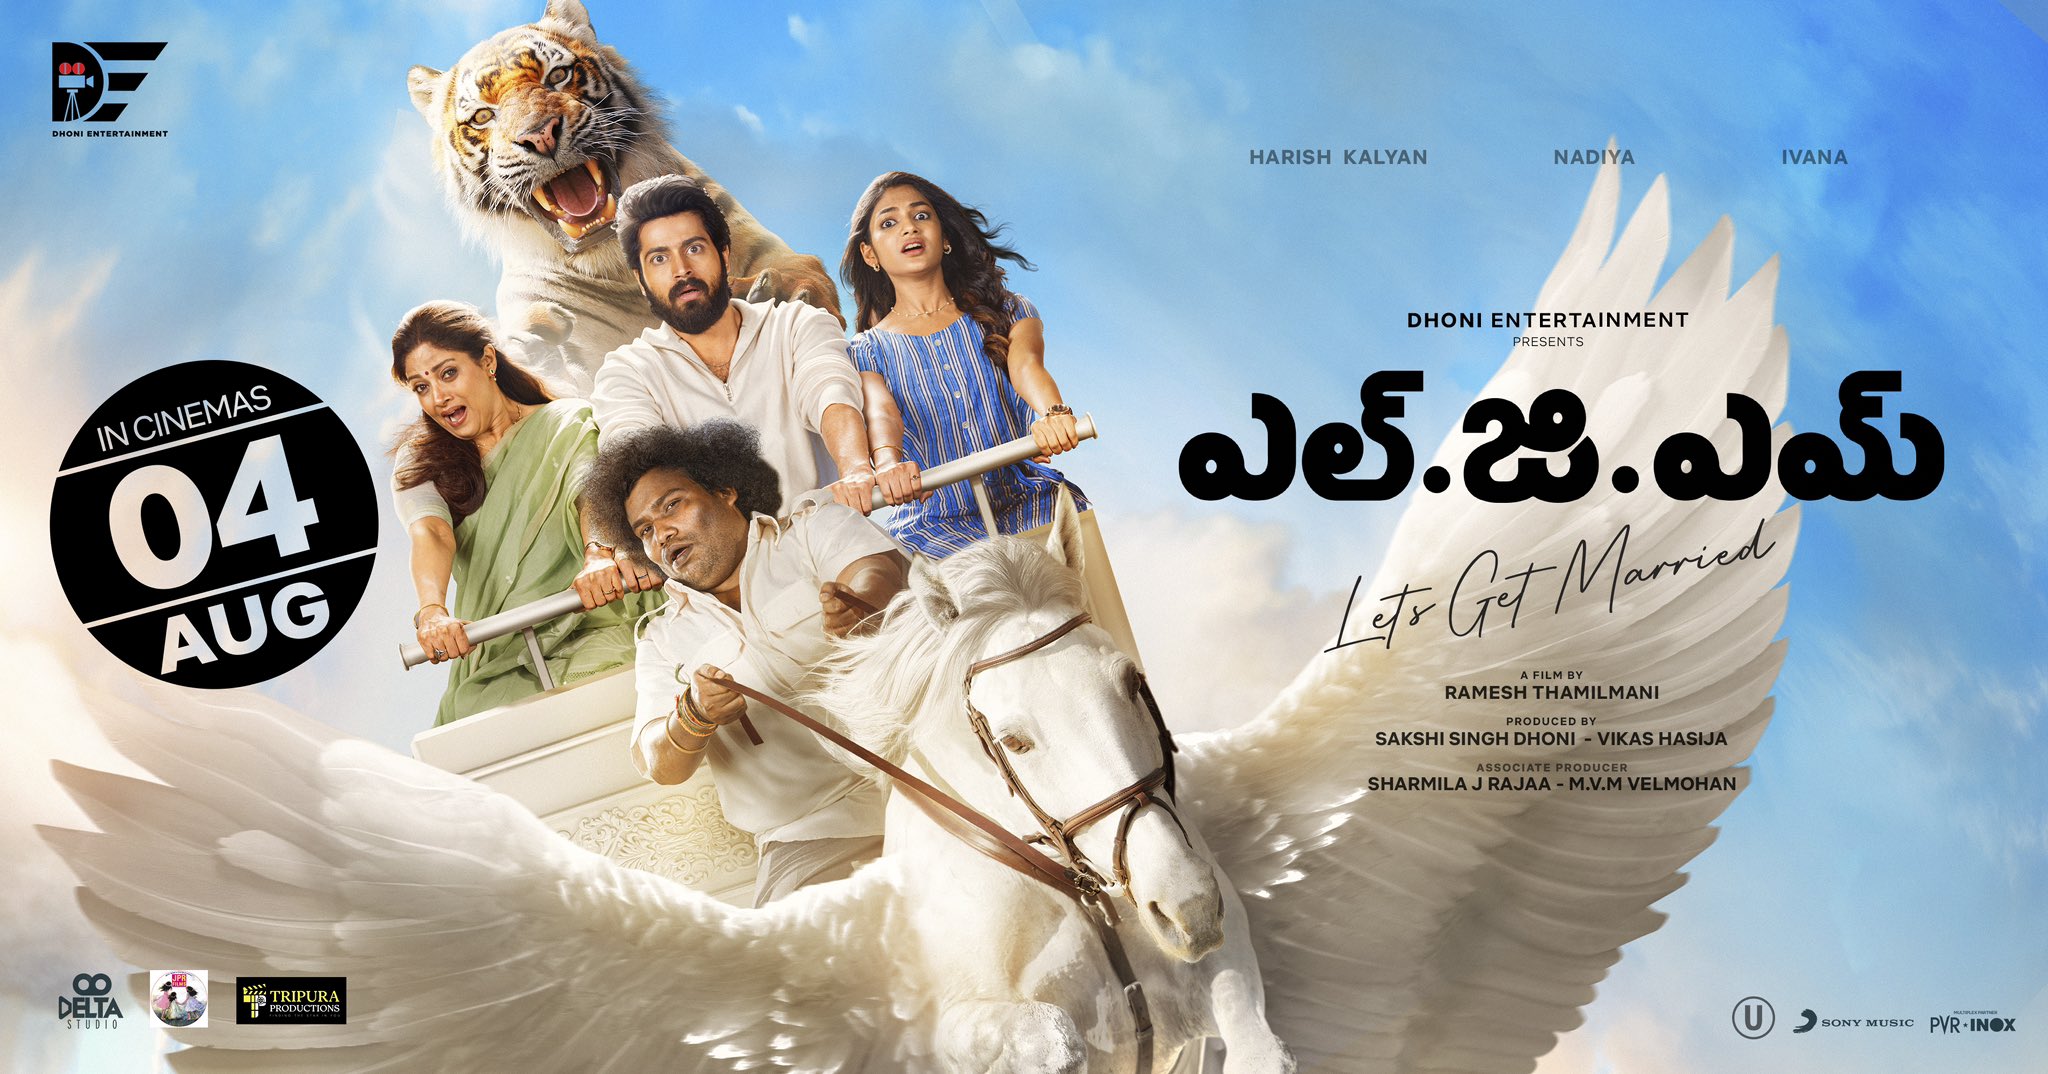 LGM Lets Get Married Telugu release date poster | Harish Kalyan | Ivana | Nadiya